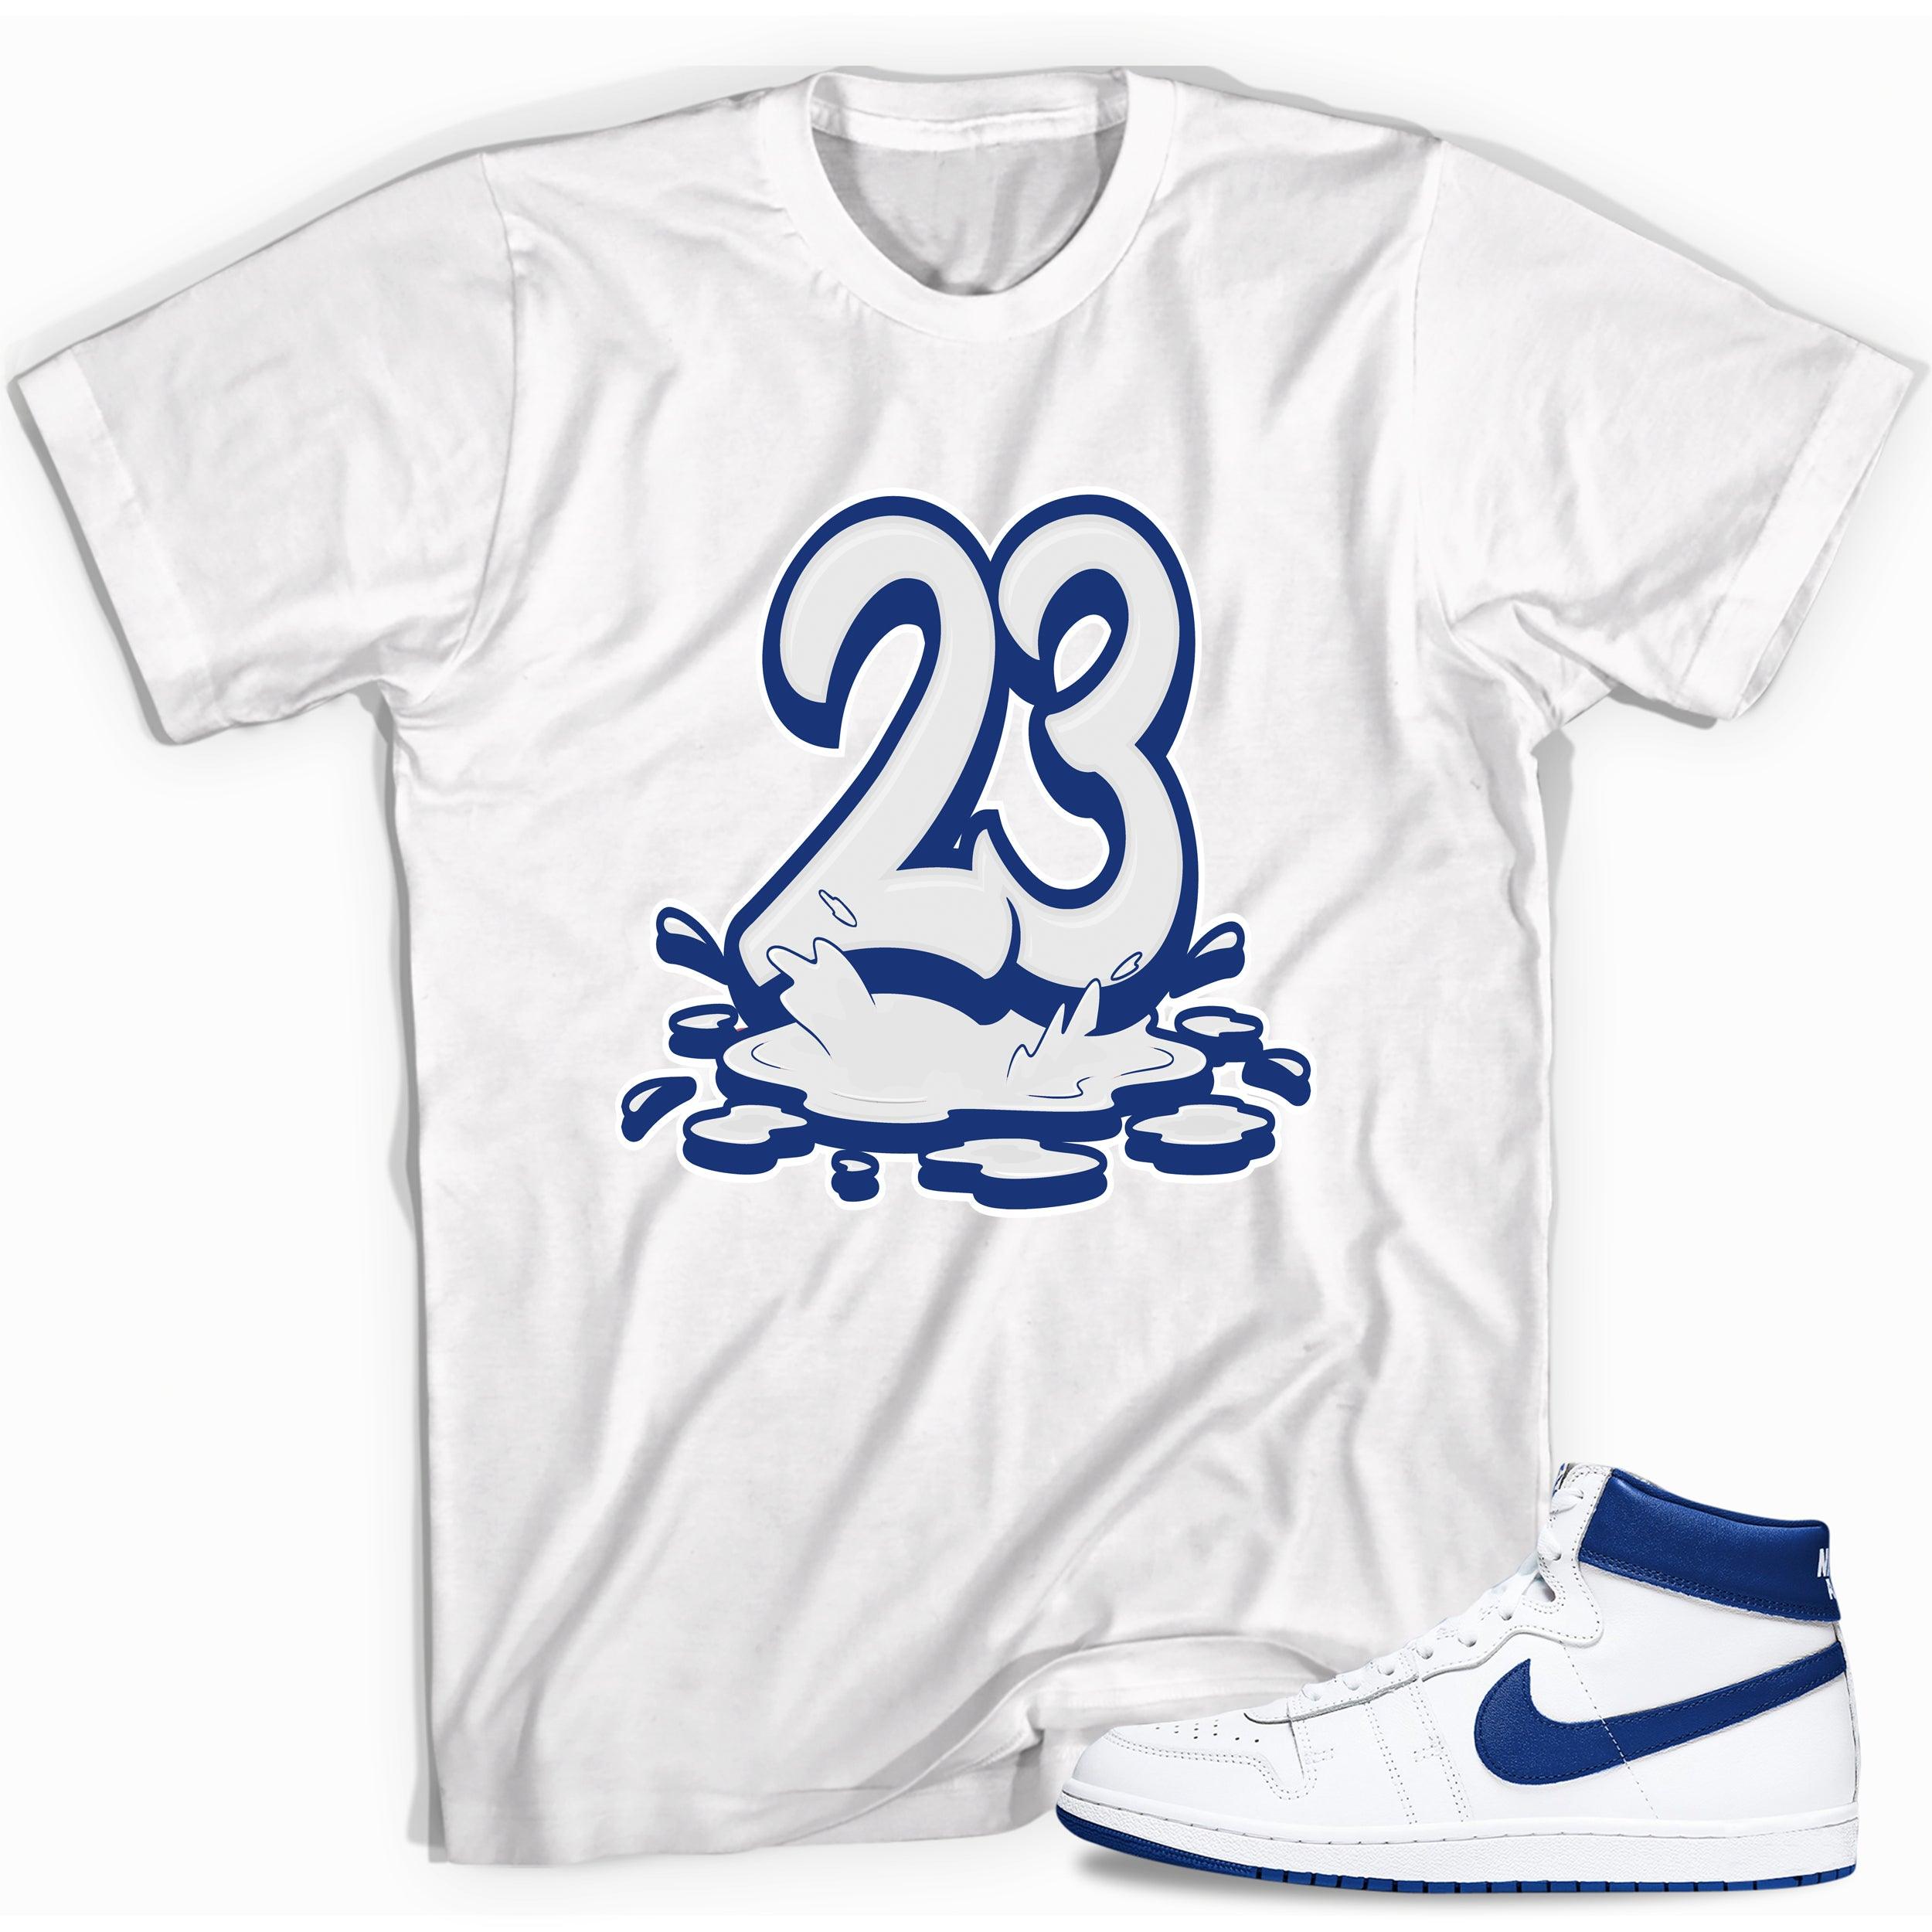 Number 23 Melting Shirt Nike Air Ship A Ma Maniére Game Royal photo